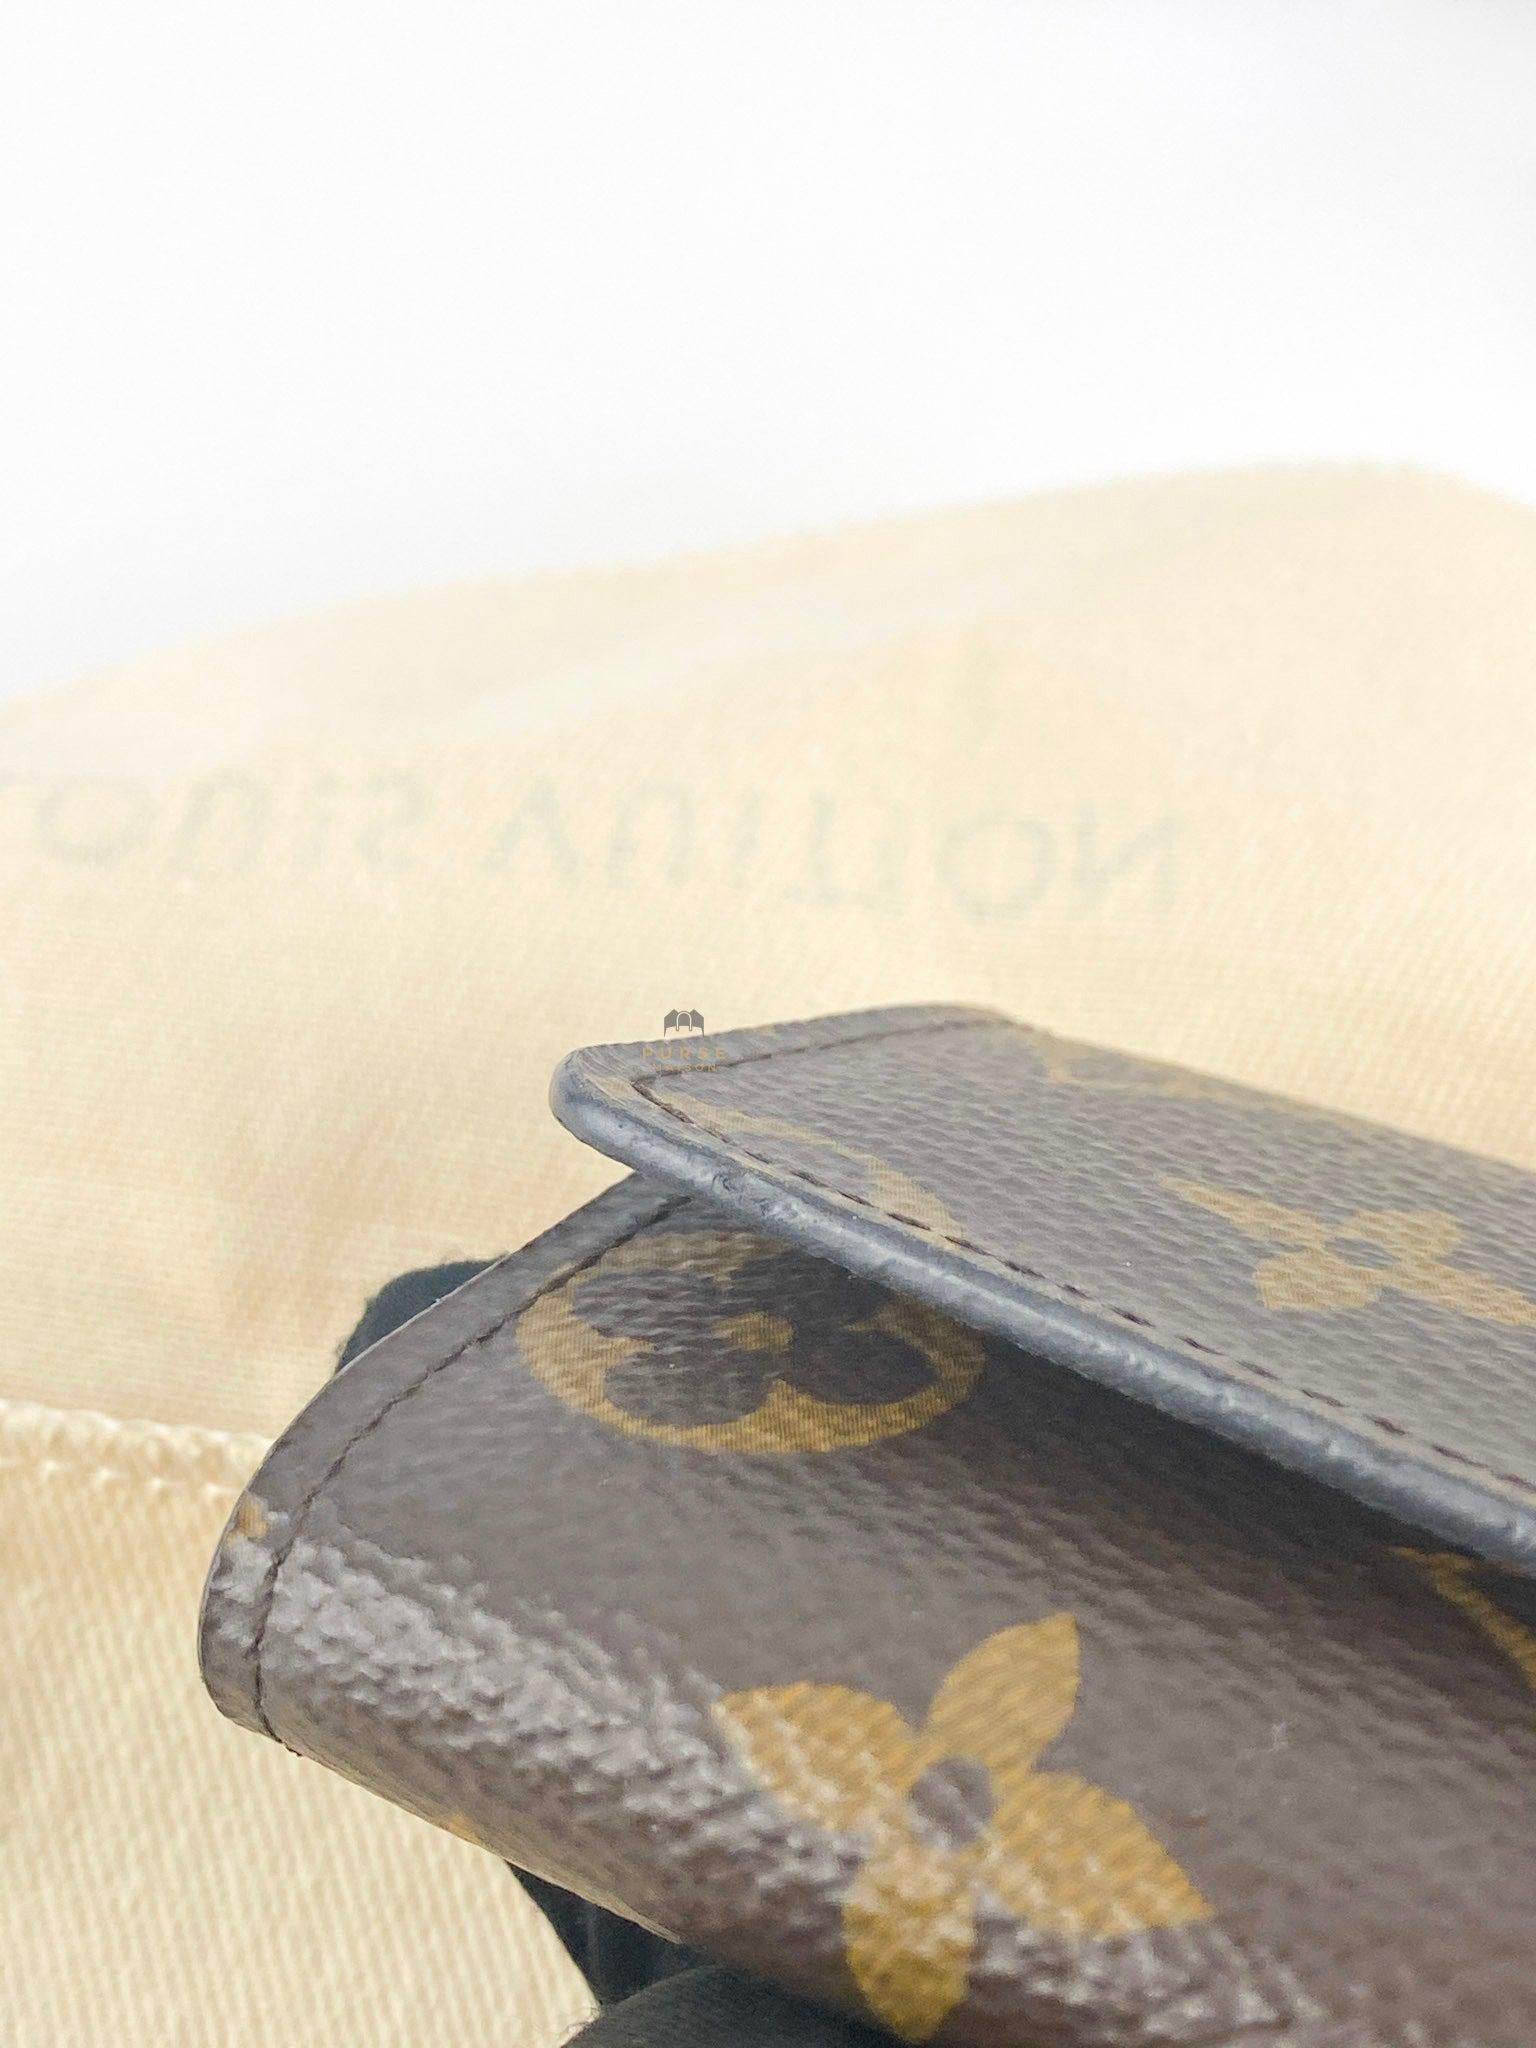 6 Key Holder Monogram Vernis Leather - Personalisation M90900